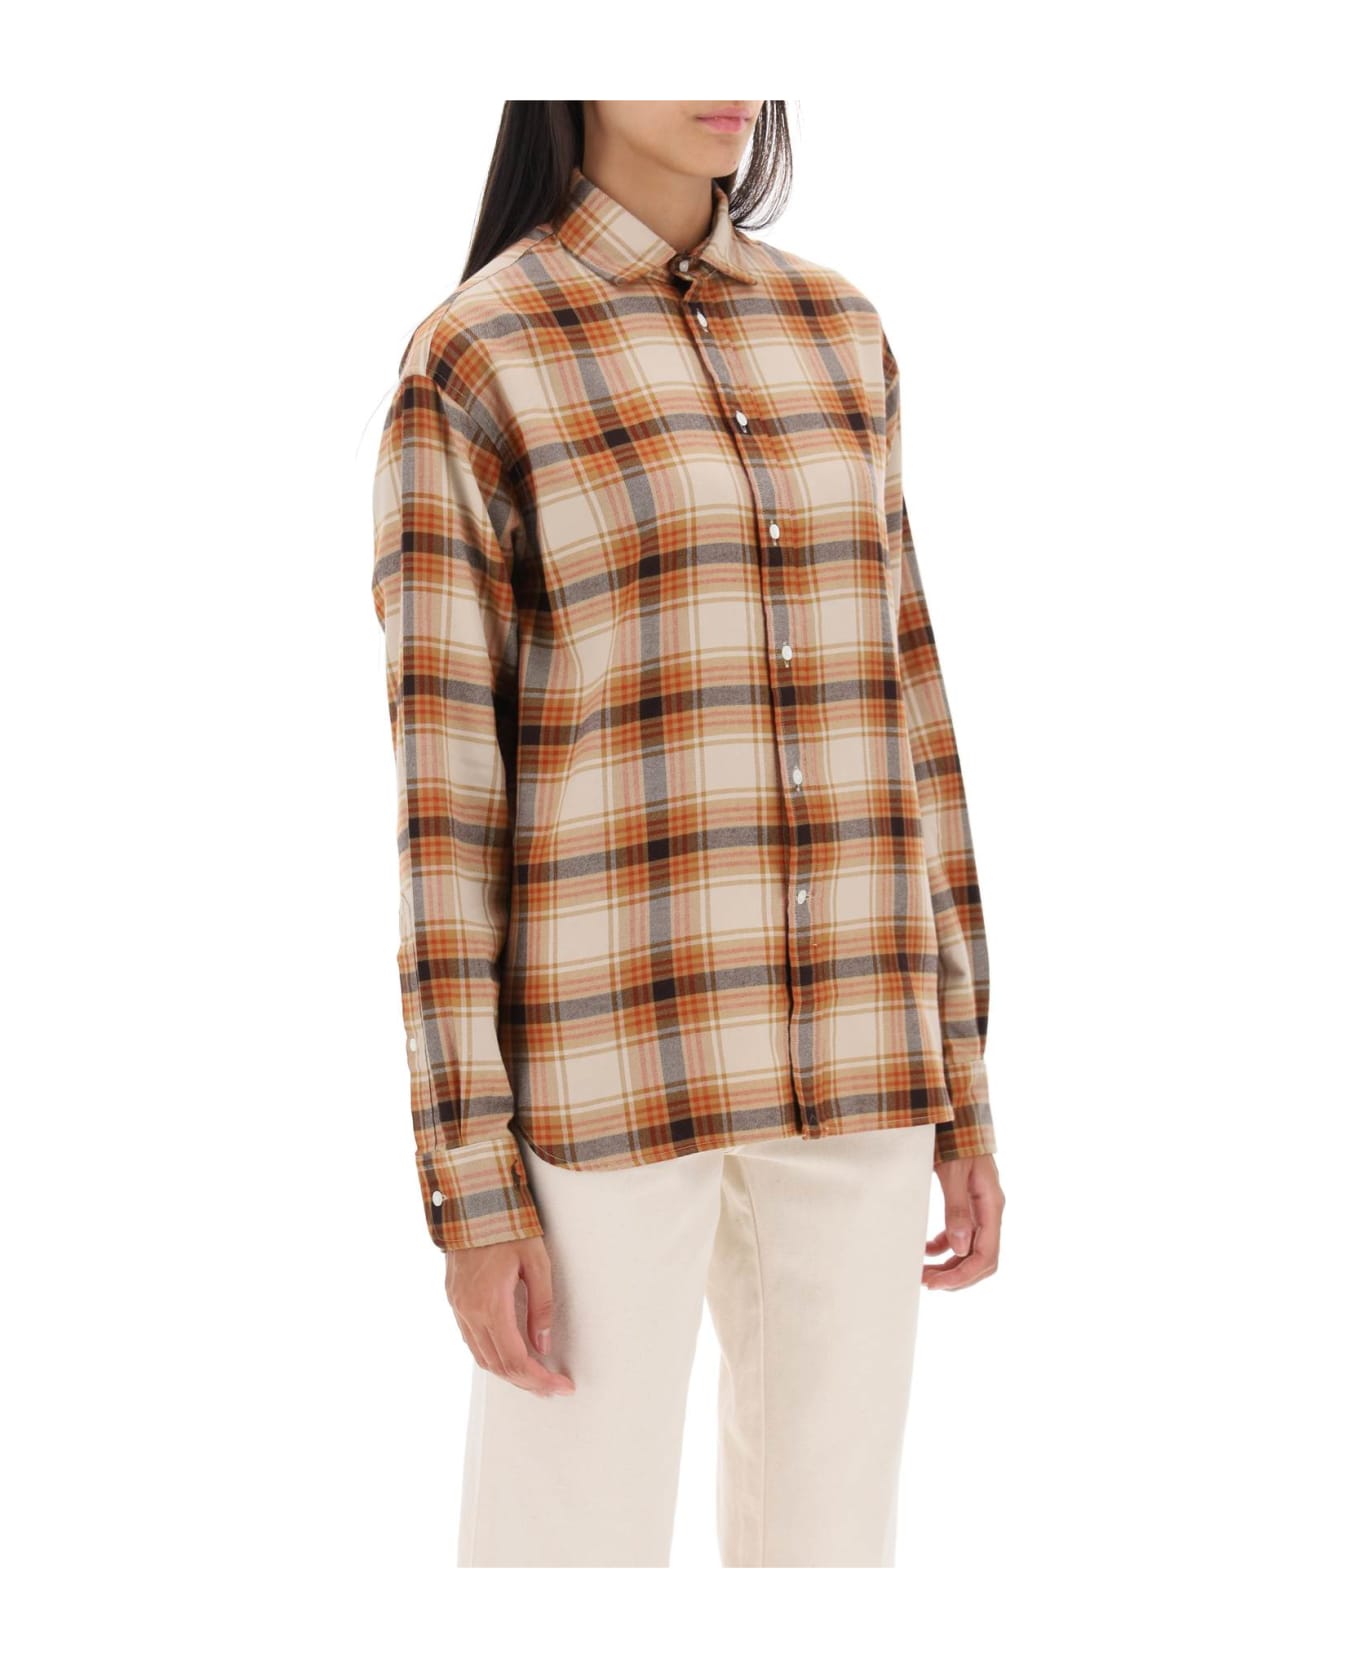 Polo Ralph Lauren Check Flannel Shirt - TAN MULTI PLAID (Beige) シャツ